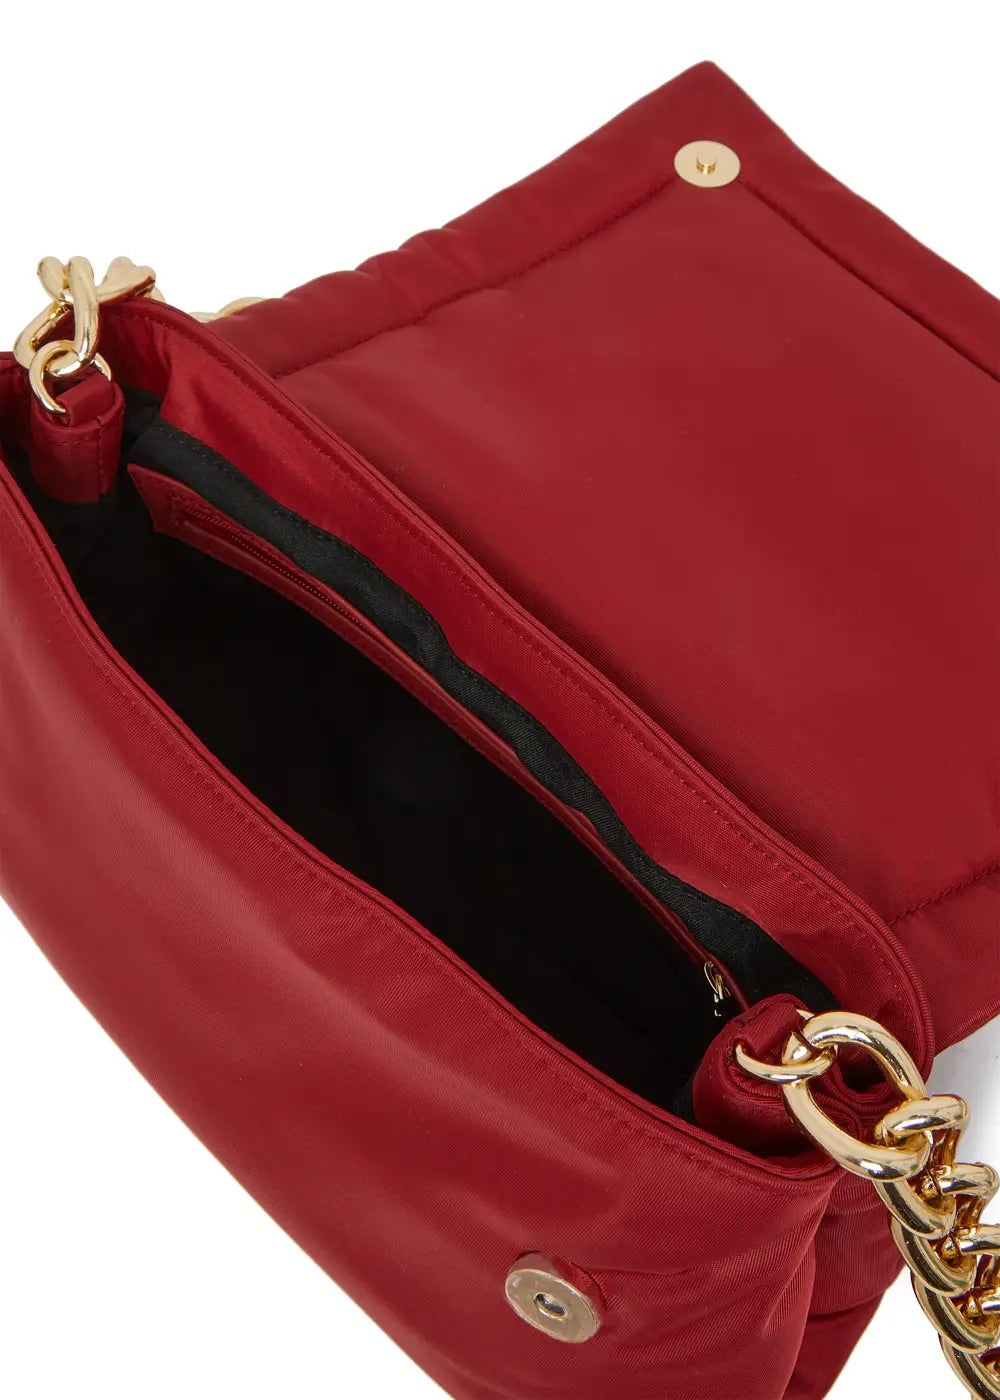 Andrea dark red nylon shoulder bag